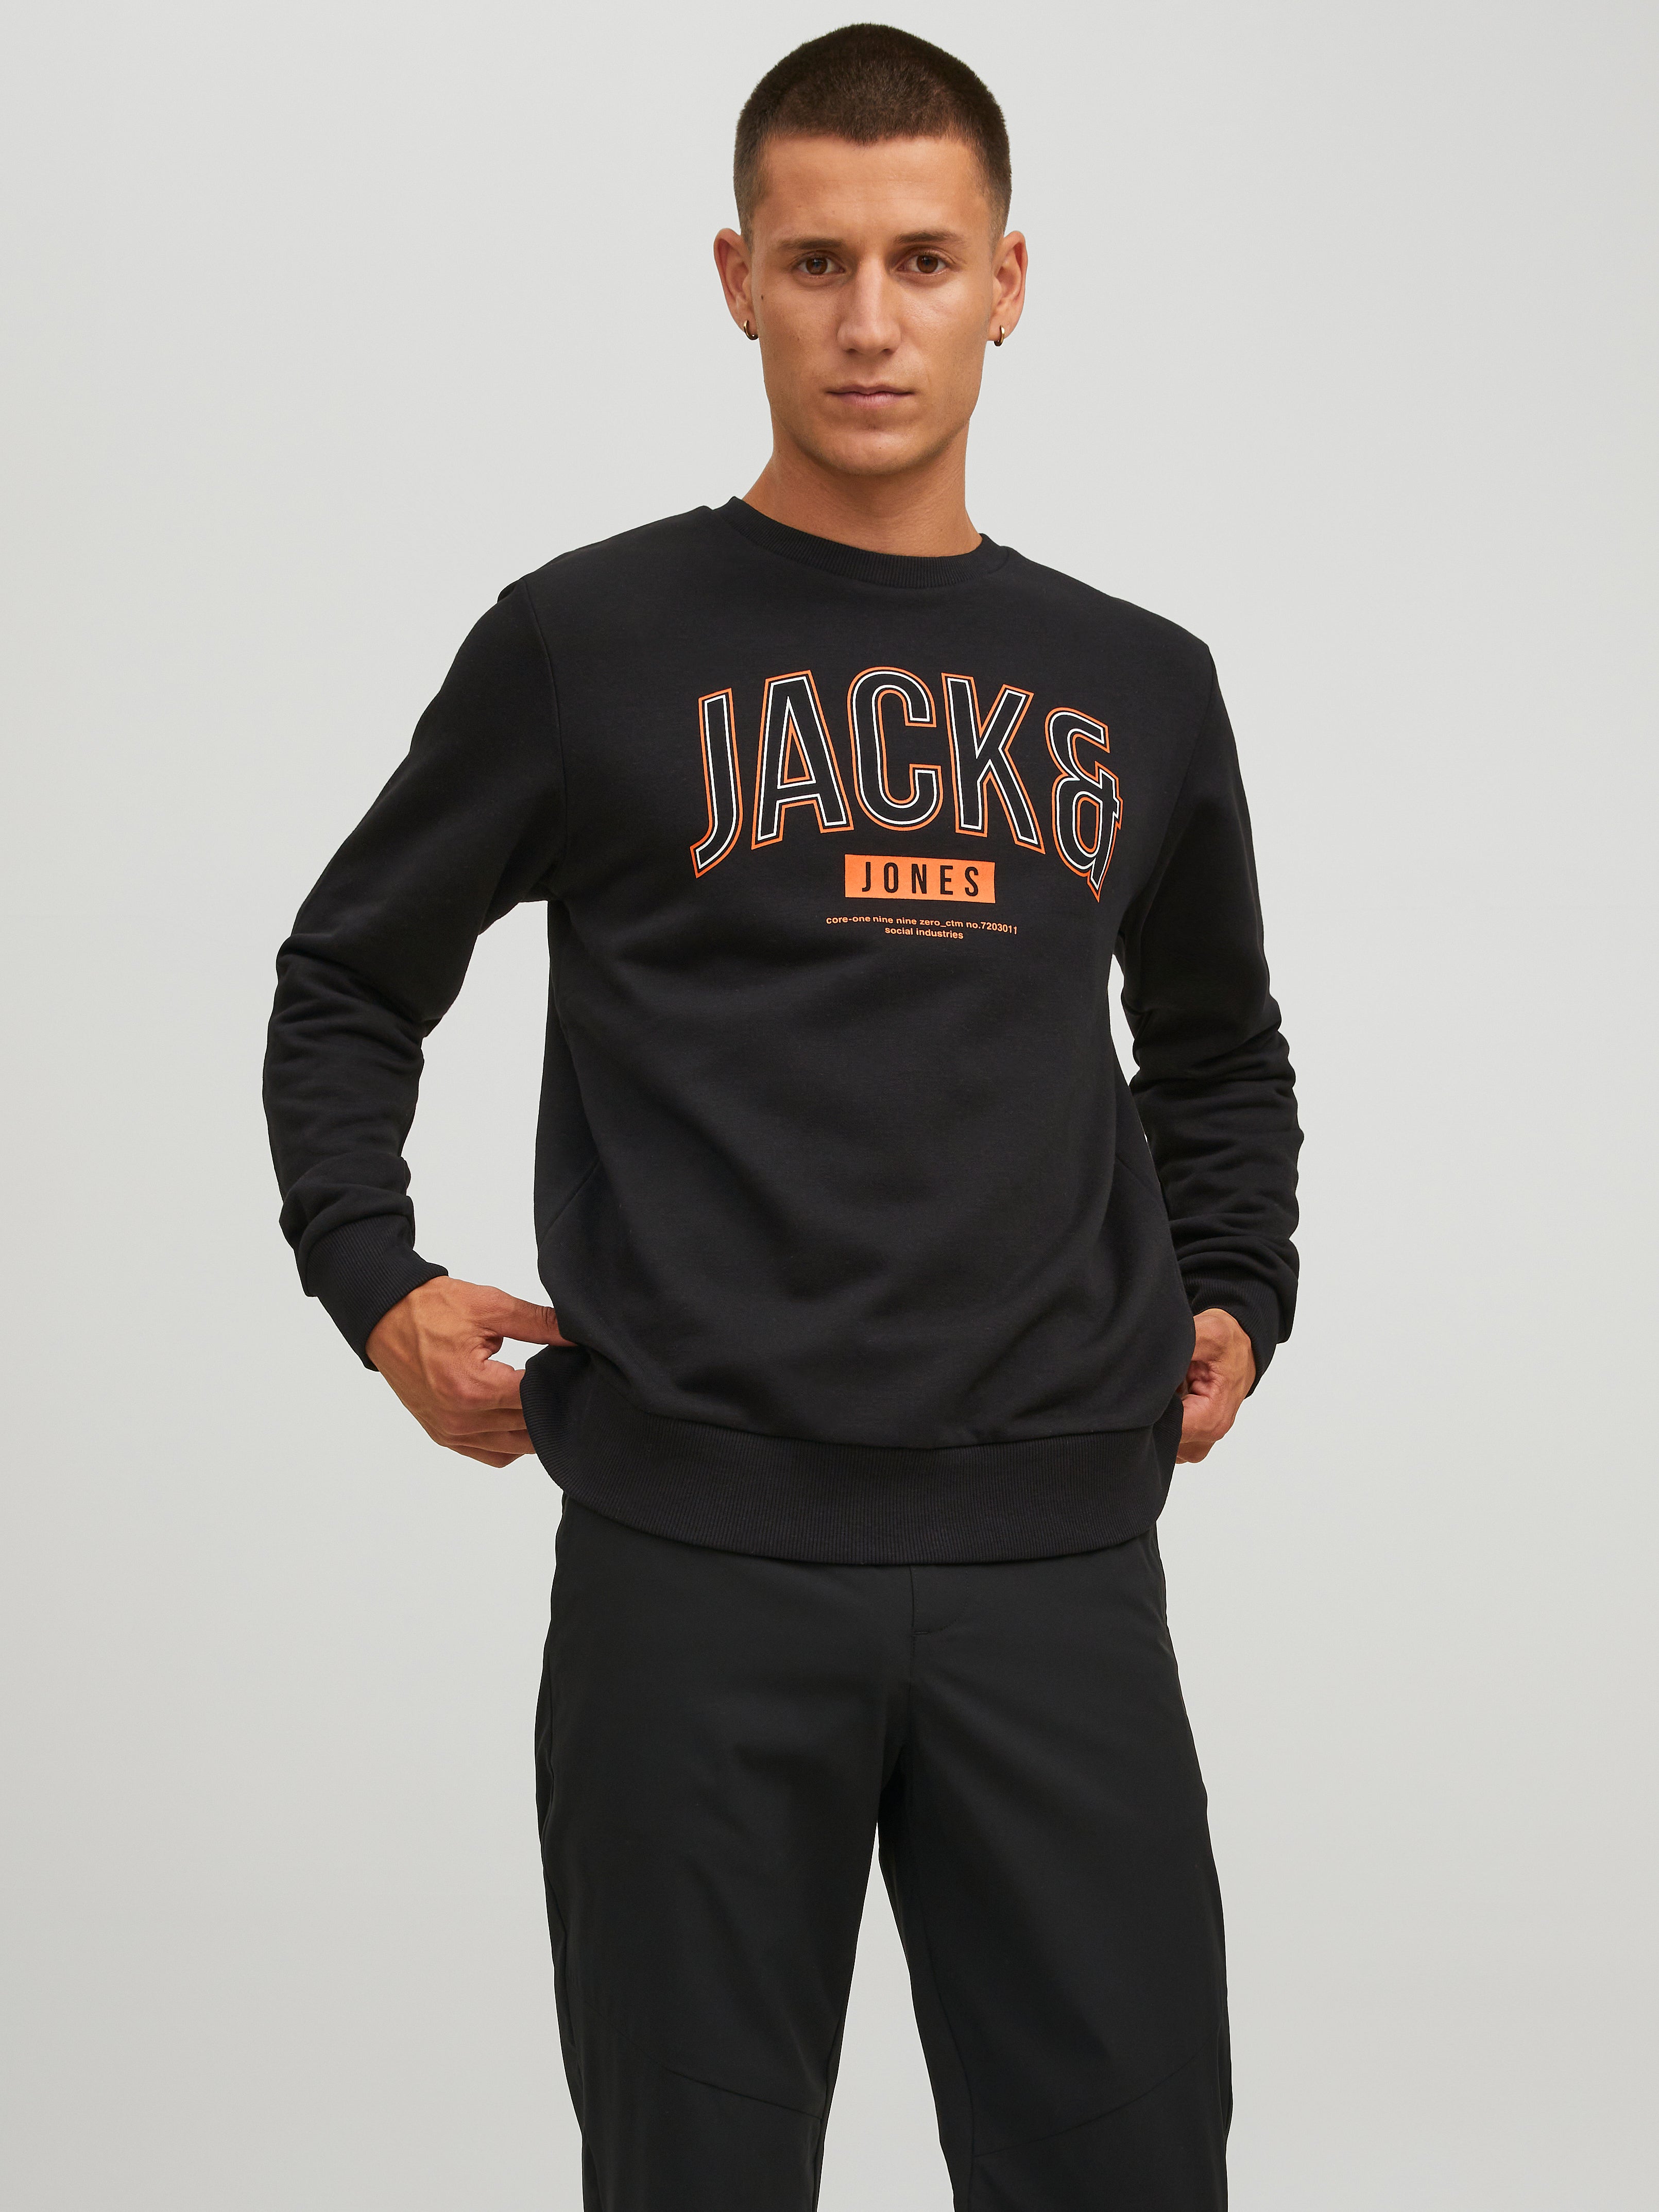 Jack & Jones jumper discount 56% Black L MEN FASHION Jumpers & Sweatshirts Zip 